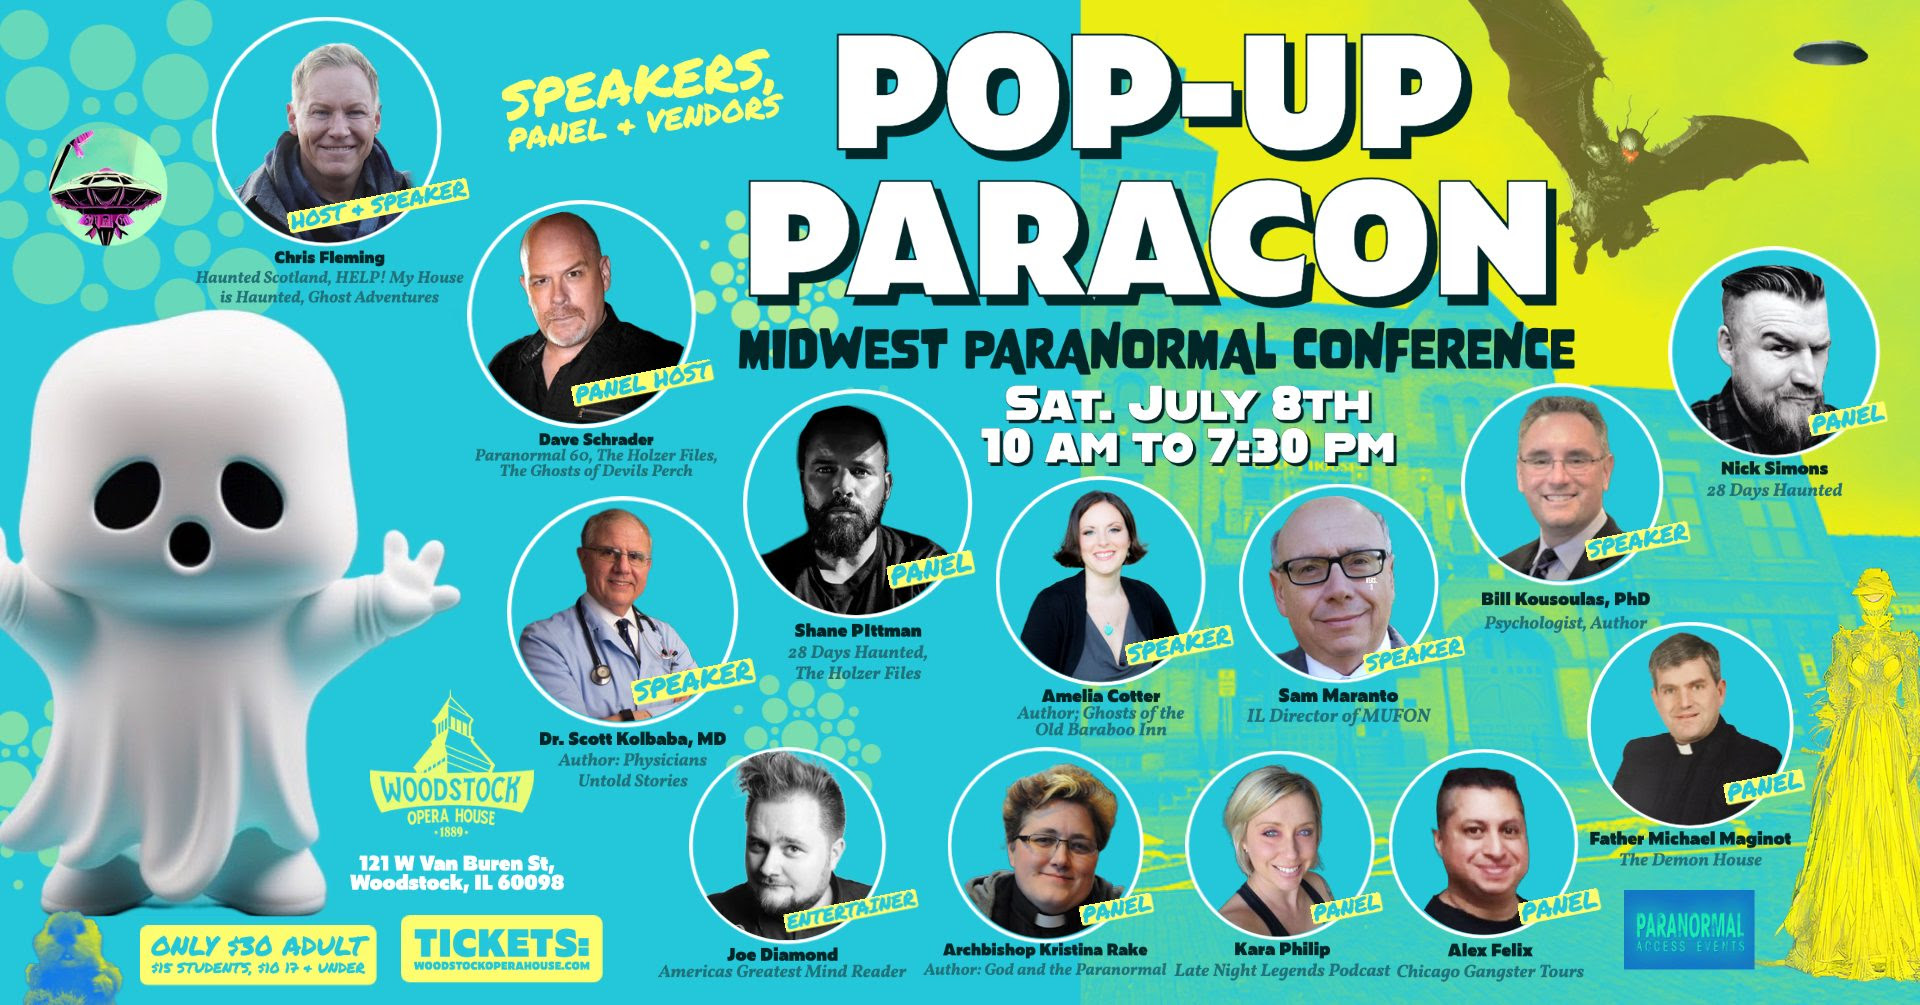 Pop-Up Paracon Midwest